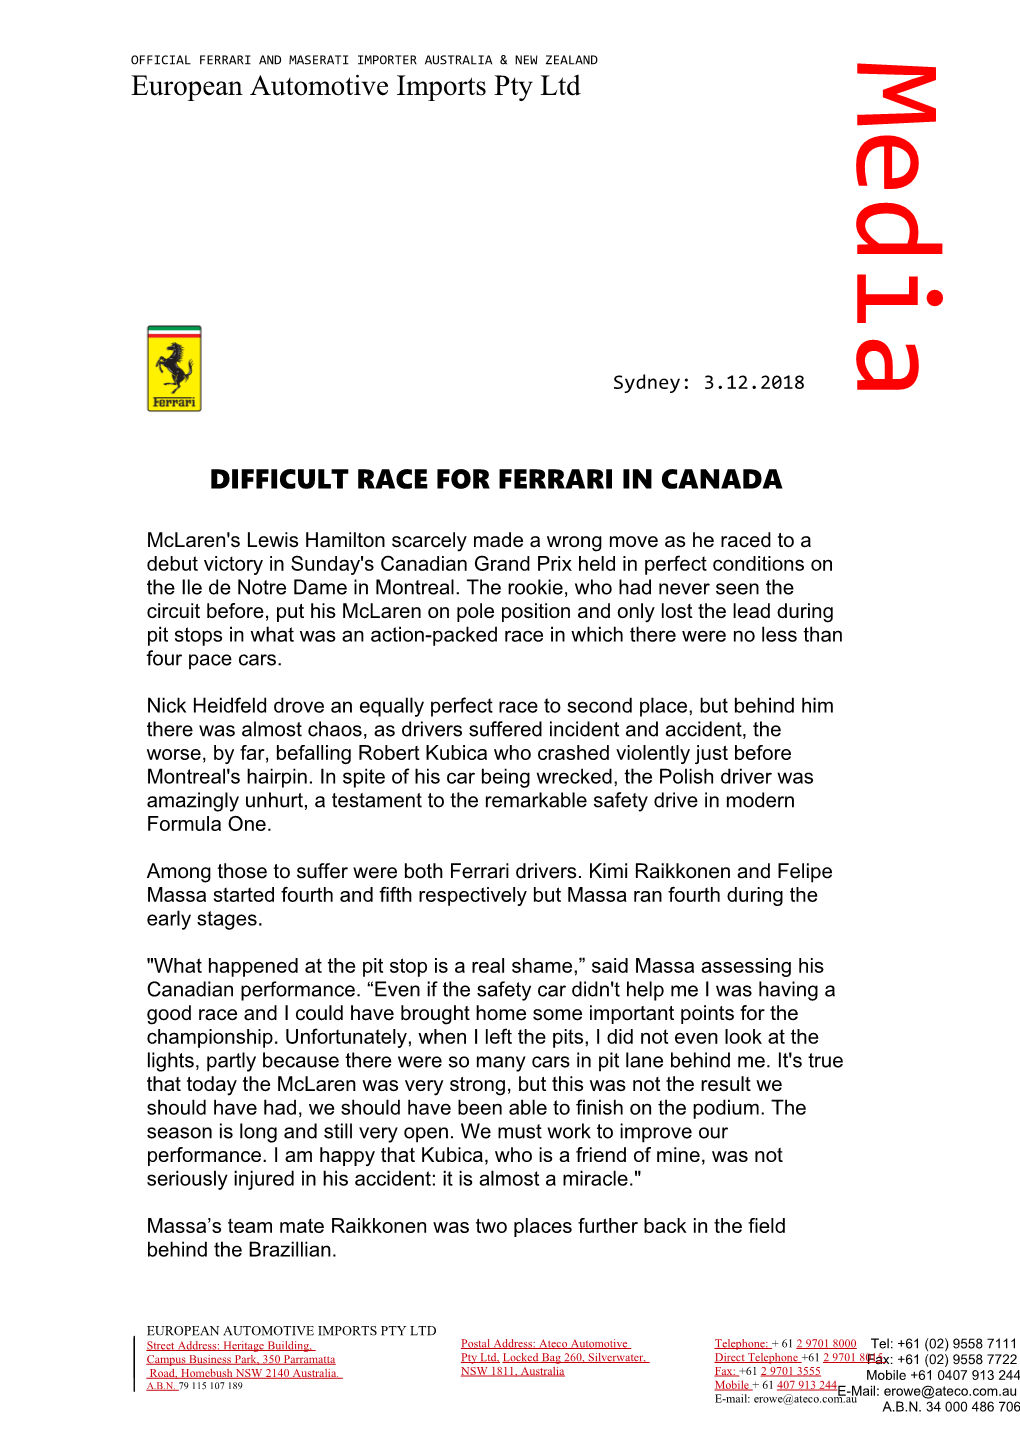 Difficult Race for Ferrari in Canada